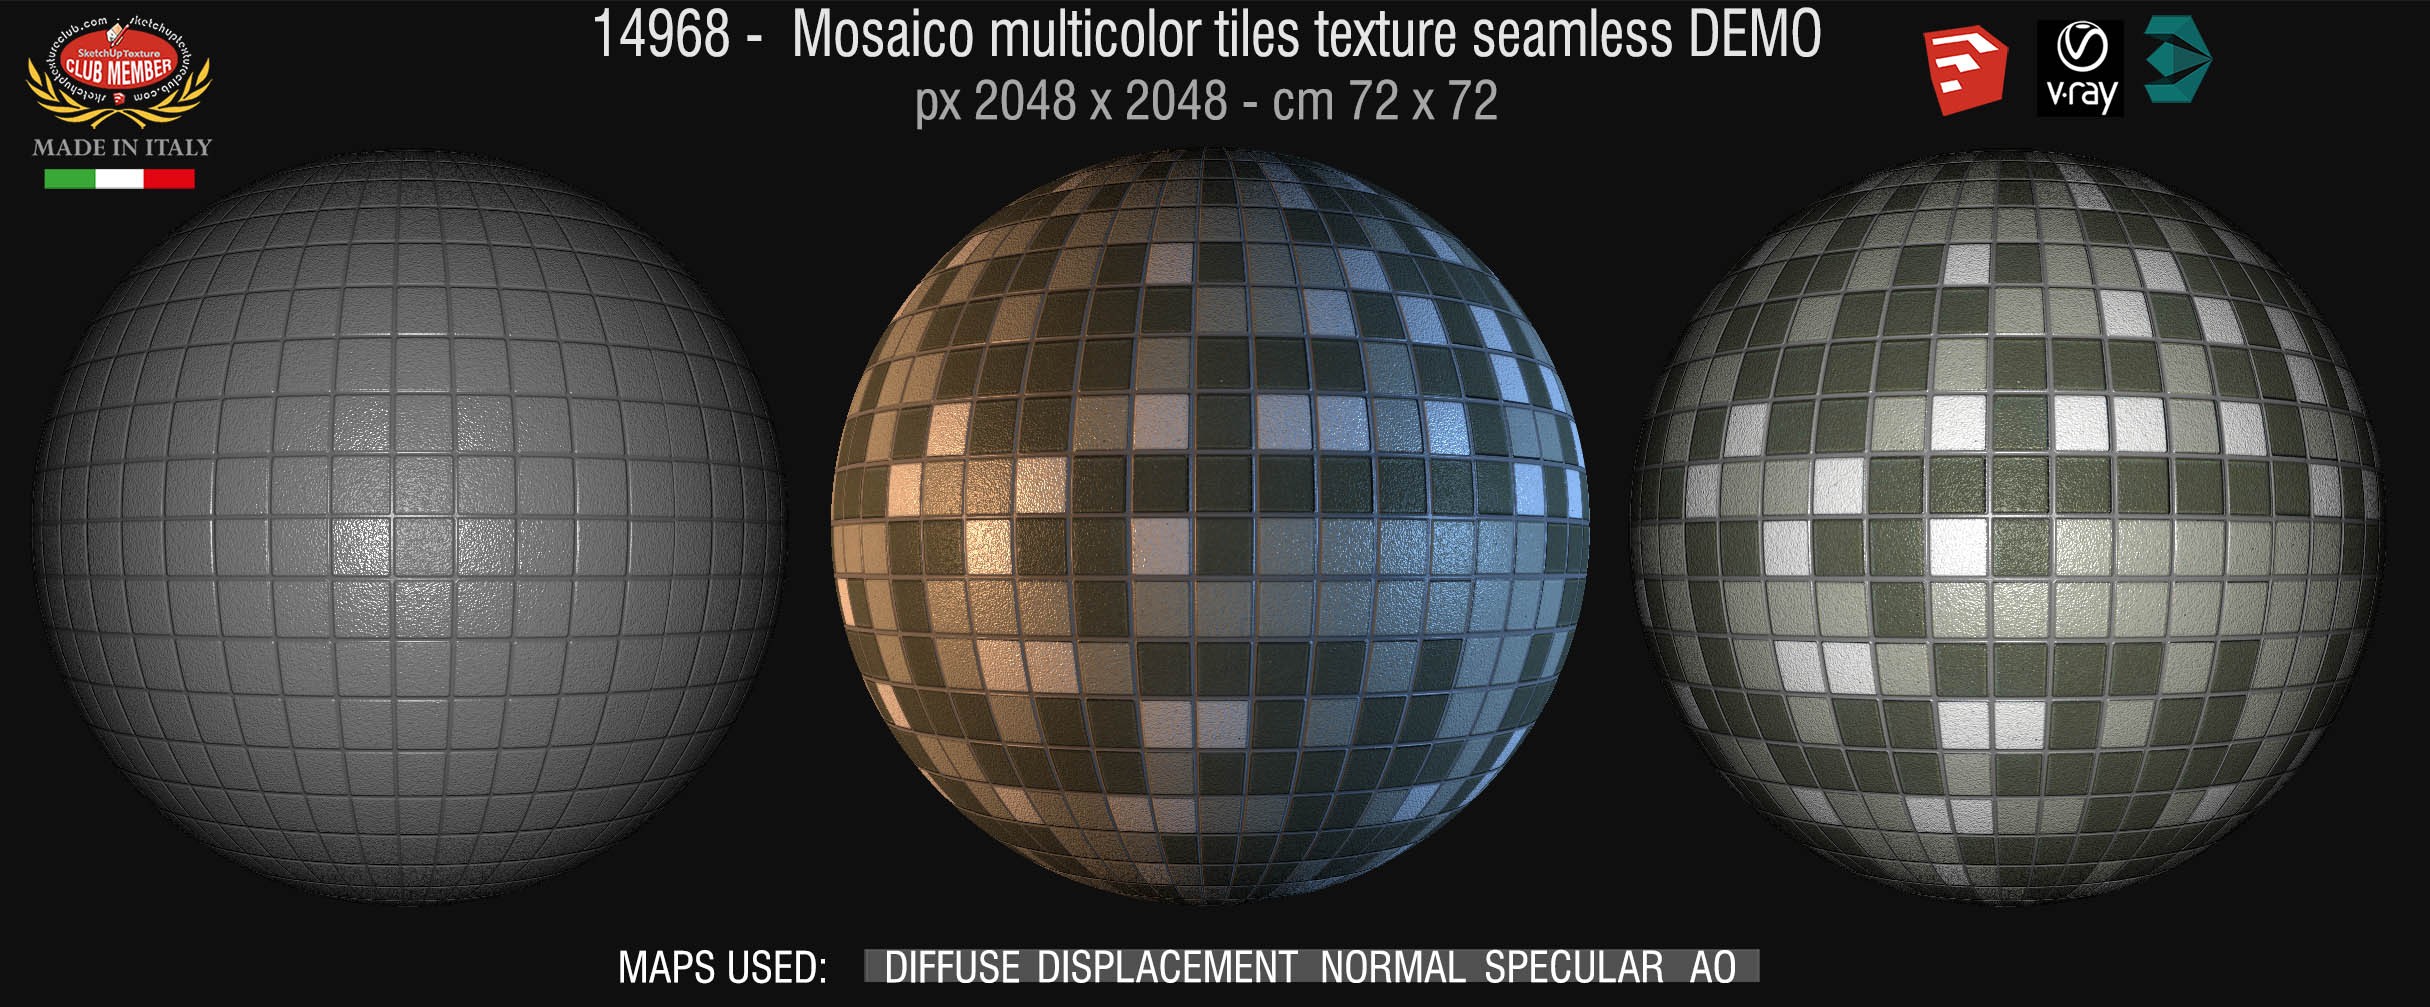 14968 Mosaico multicolor tiles texture seamless + maps DEMO